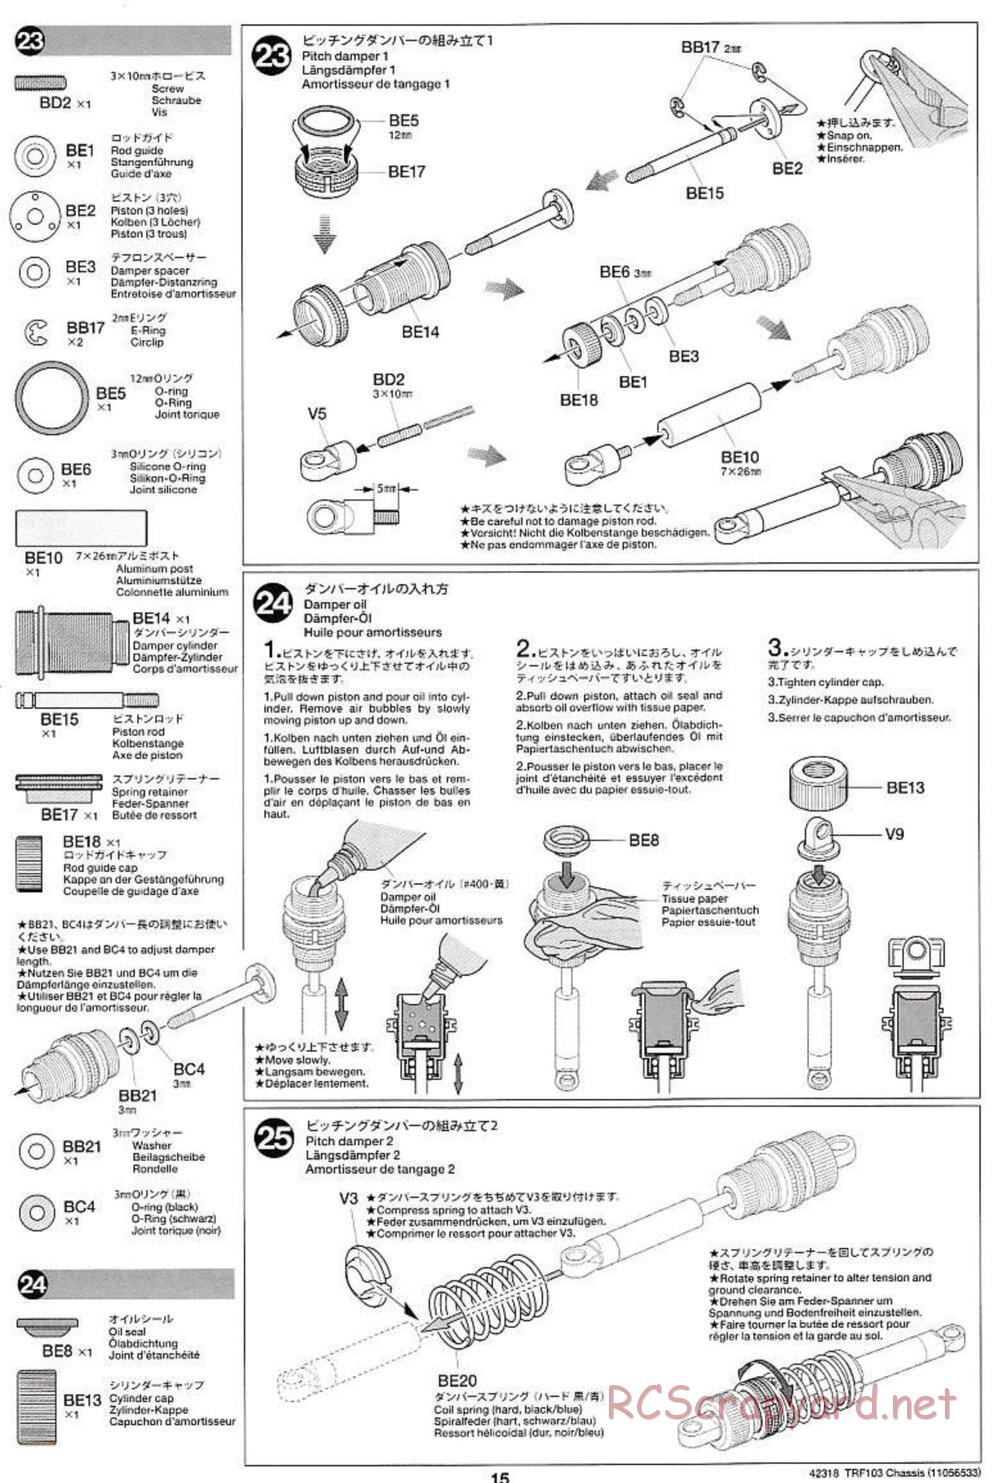 Tamiya - TRF103 Chassis - Manual - Page 15